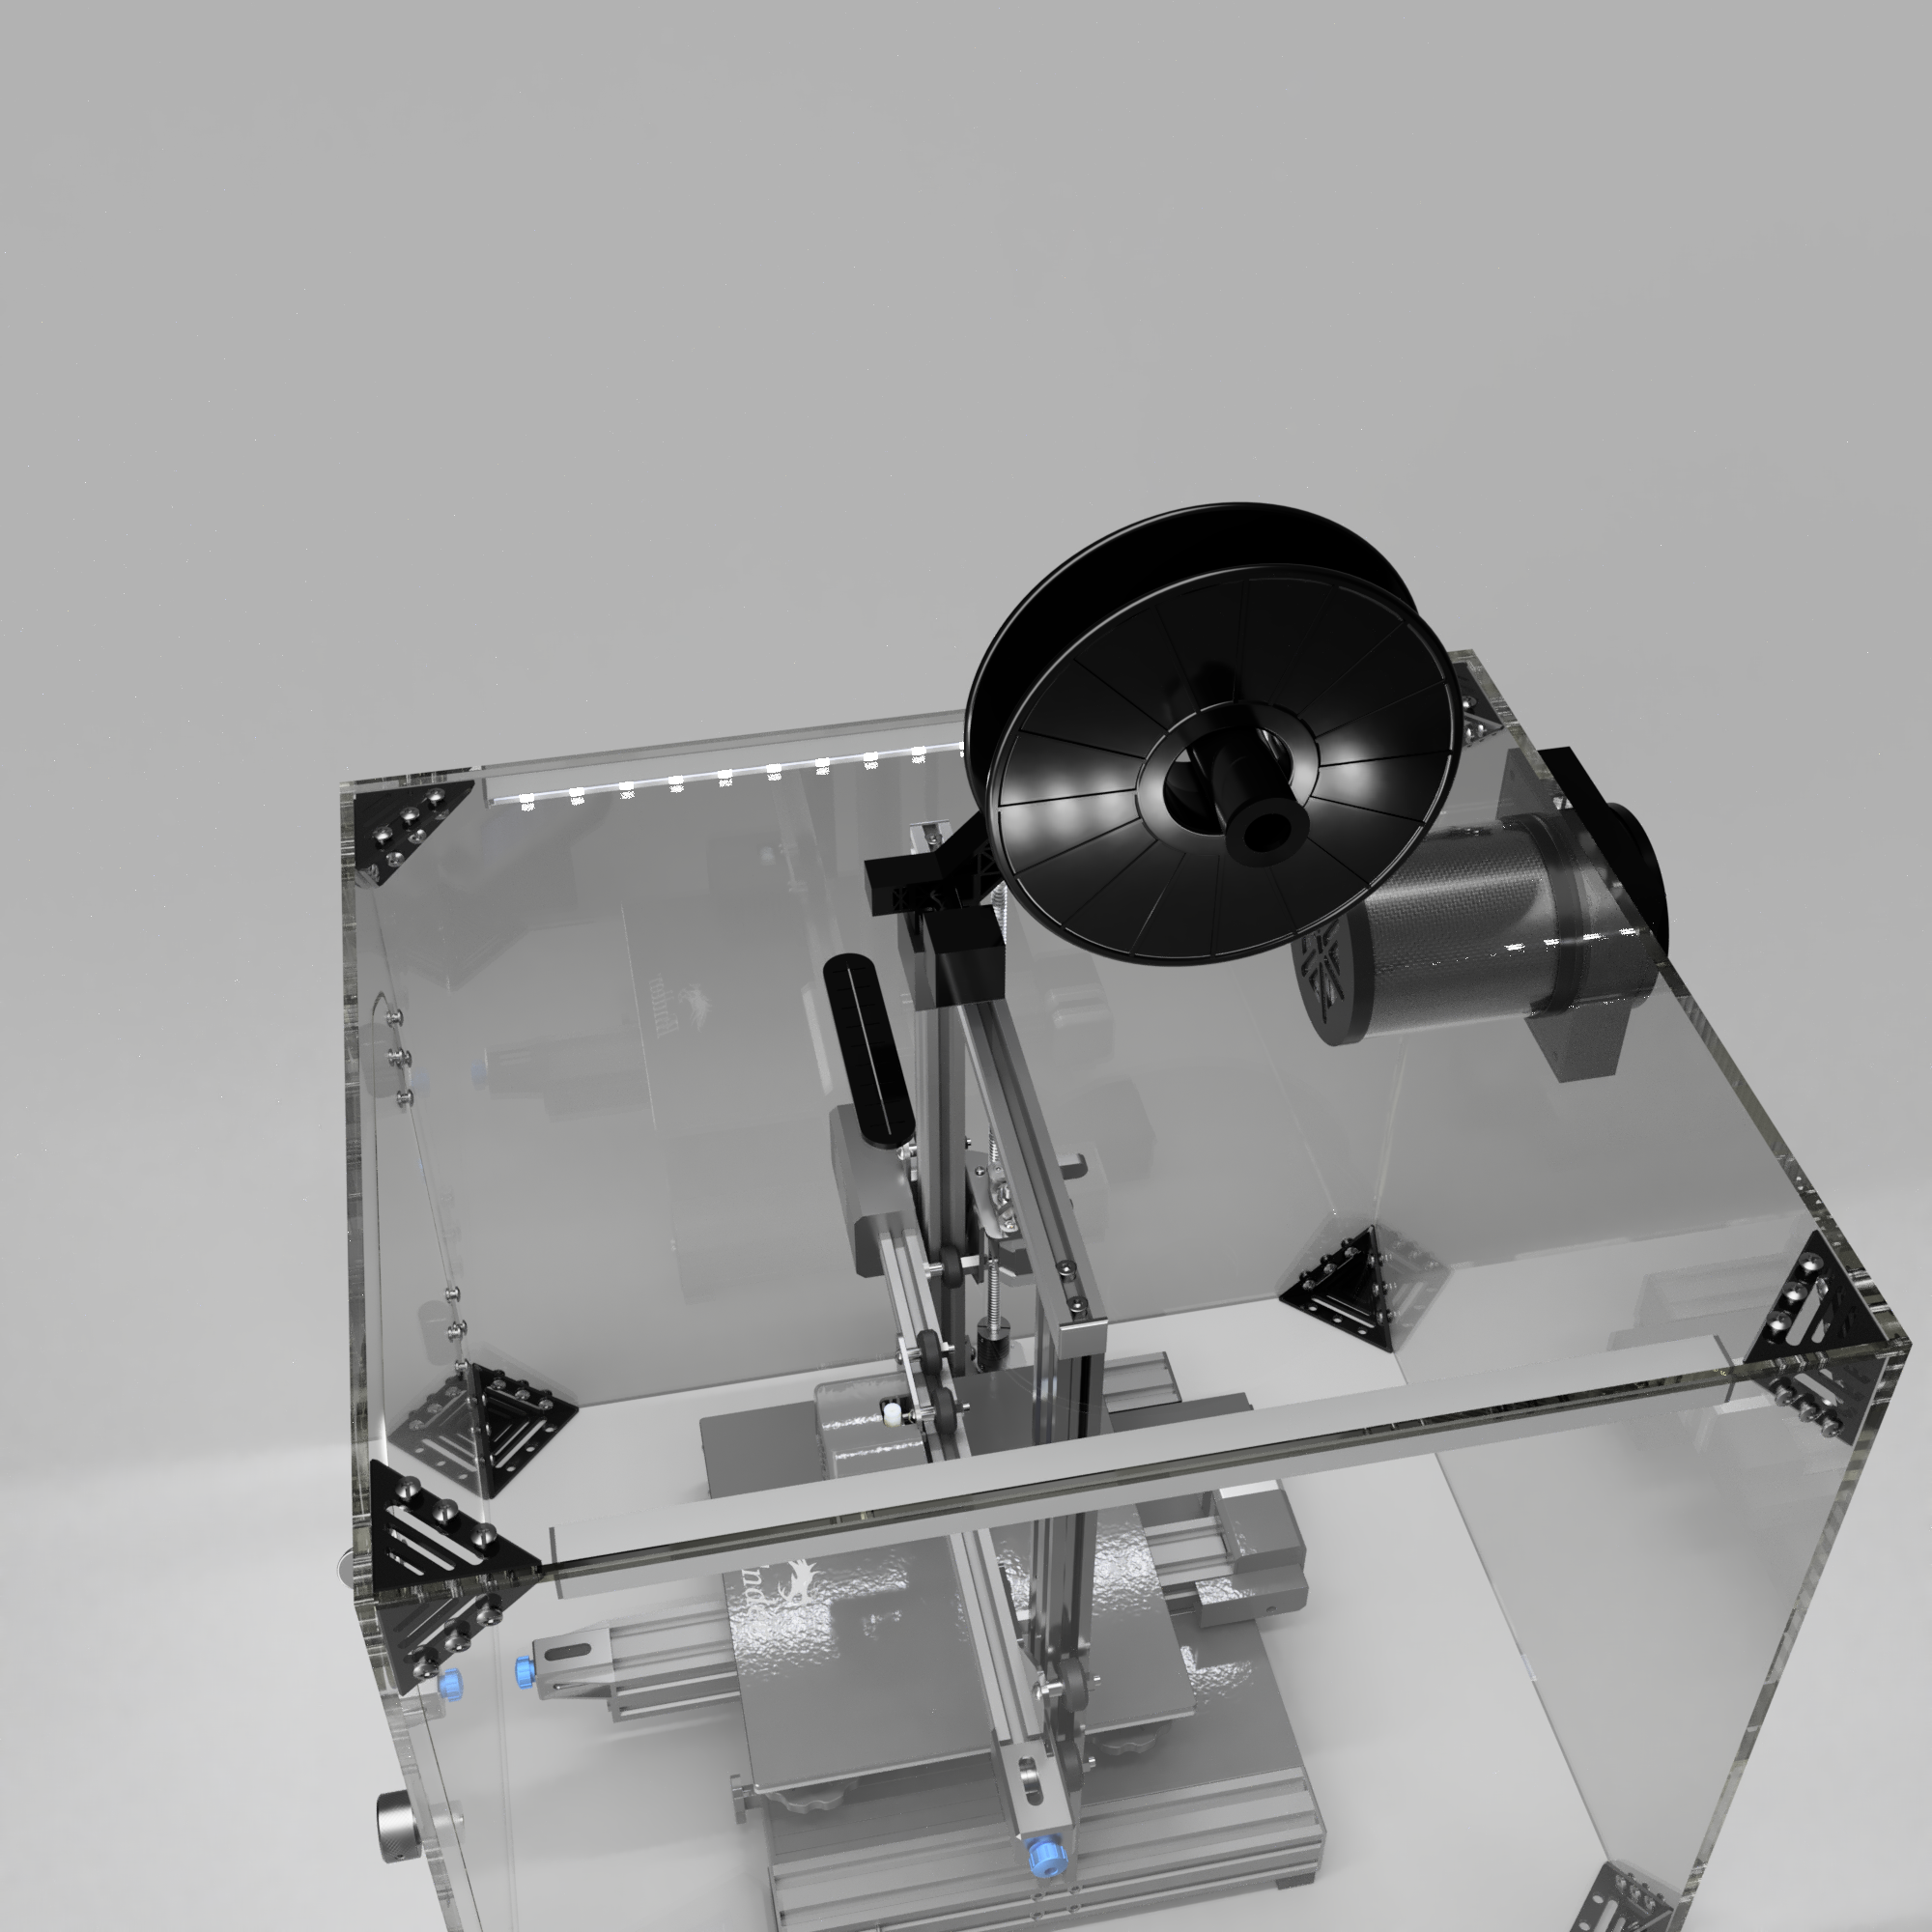 Creality Ender 3 S1/Pro Enclosure Kit